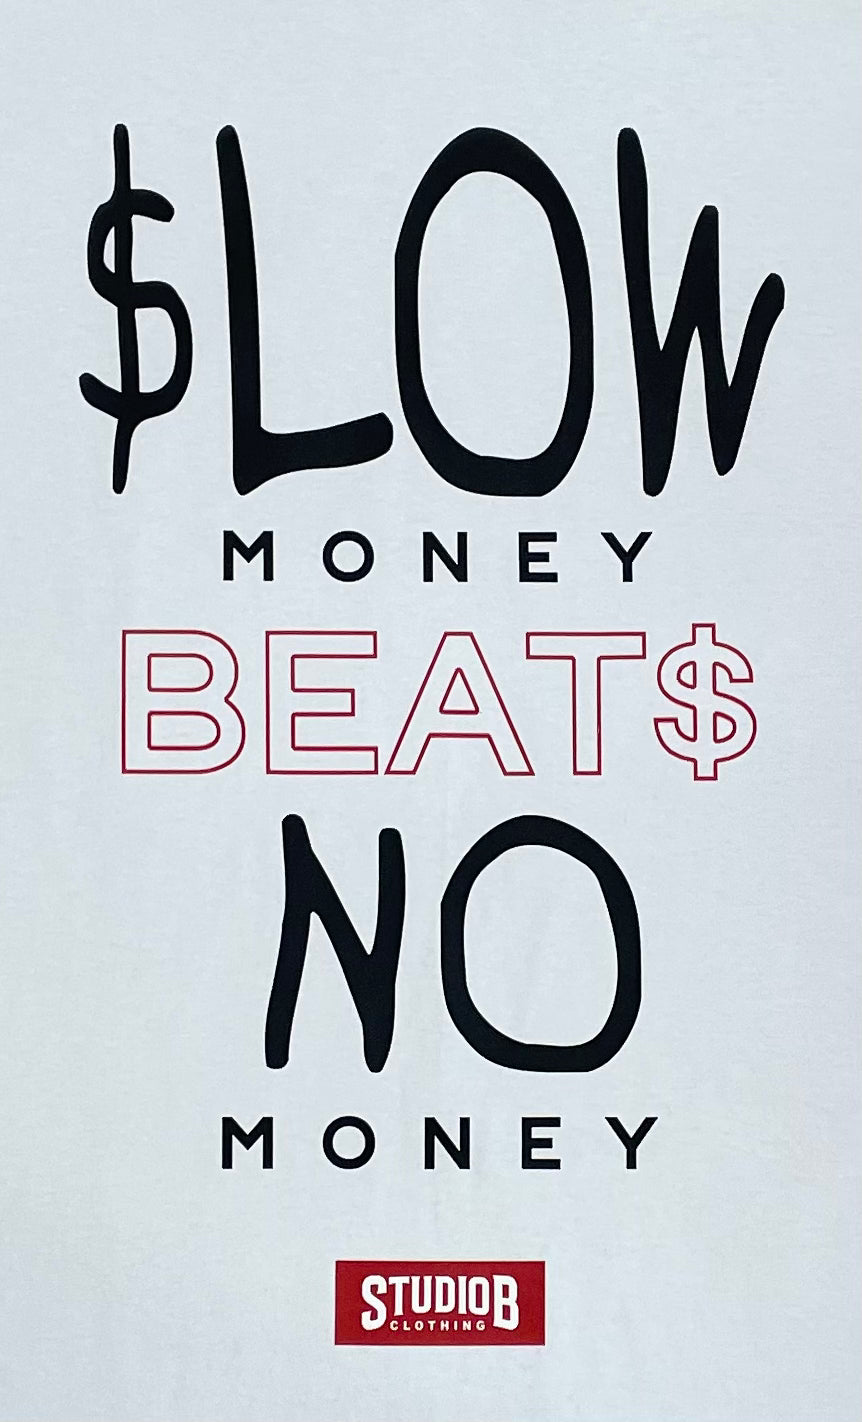 “NEW” Studio B Slow Money Beats No Money Tee (White)